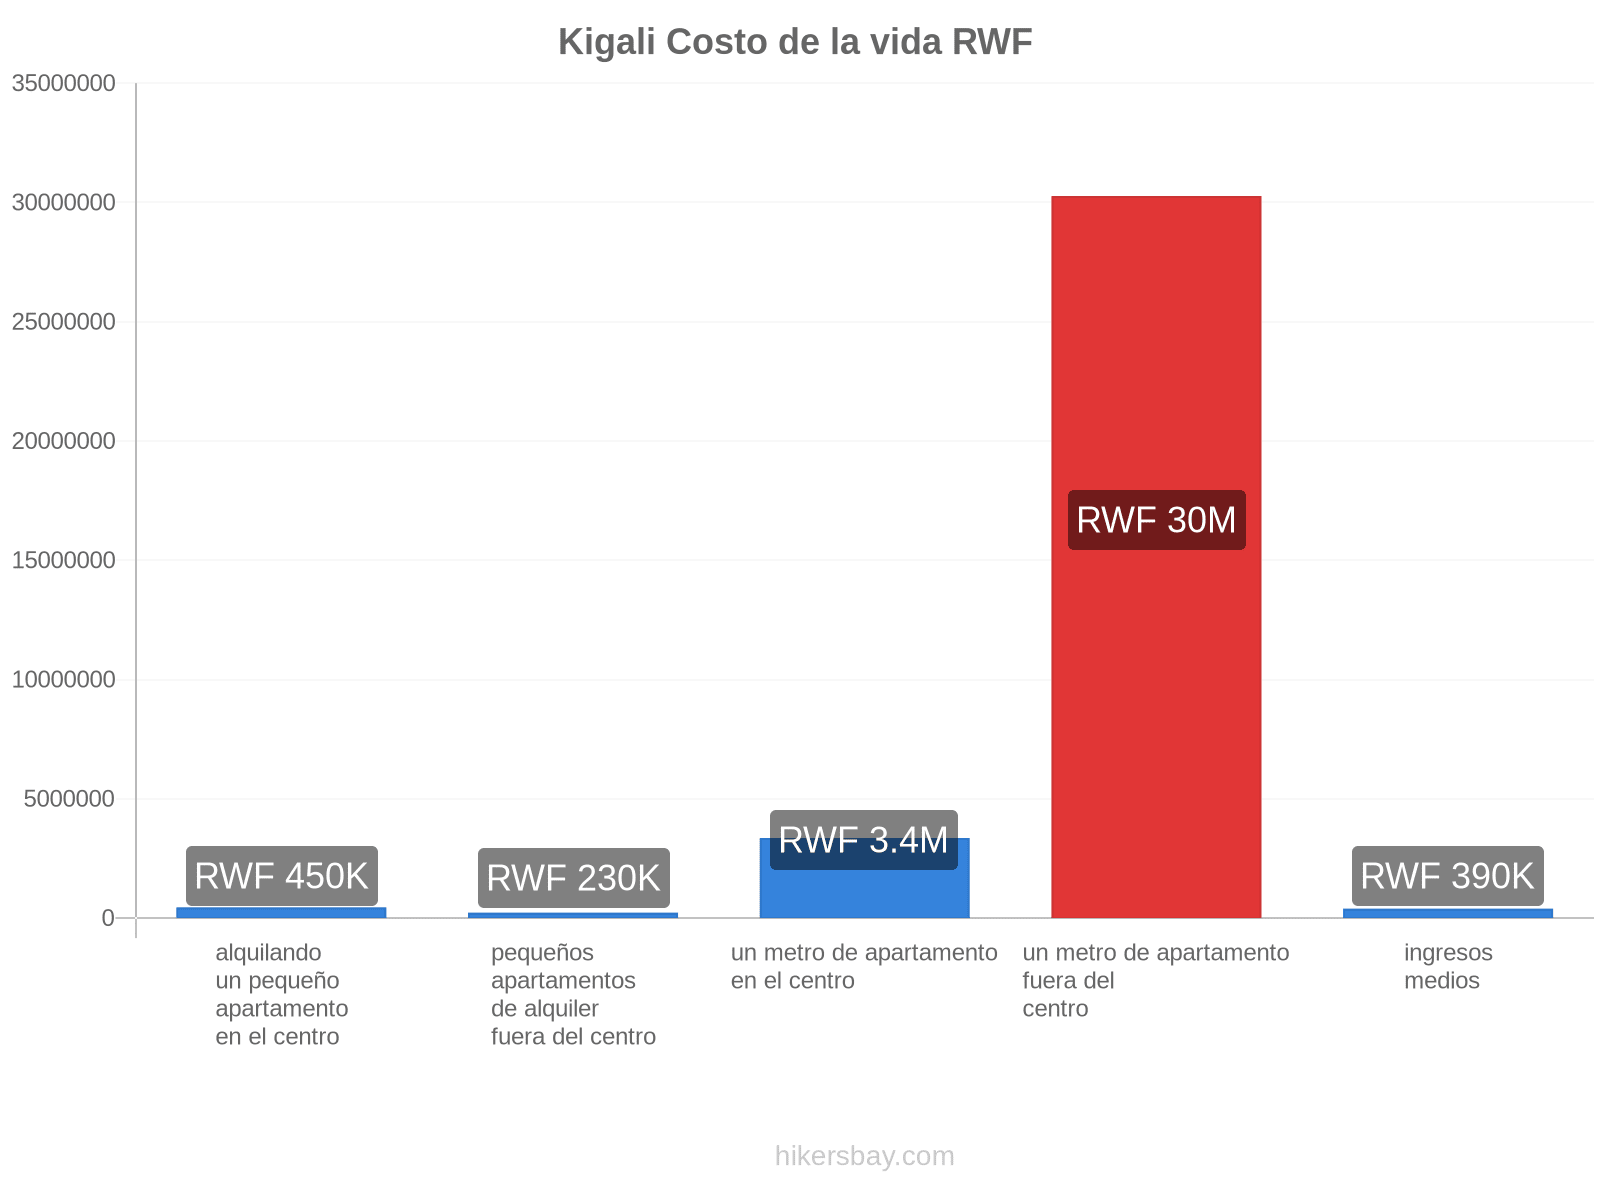 Kigali costo de la vida hikersbay.com